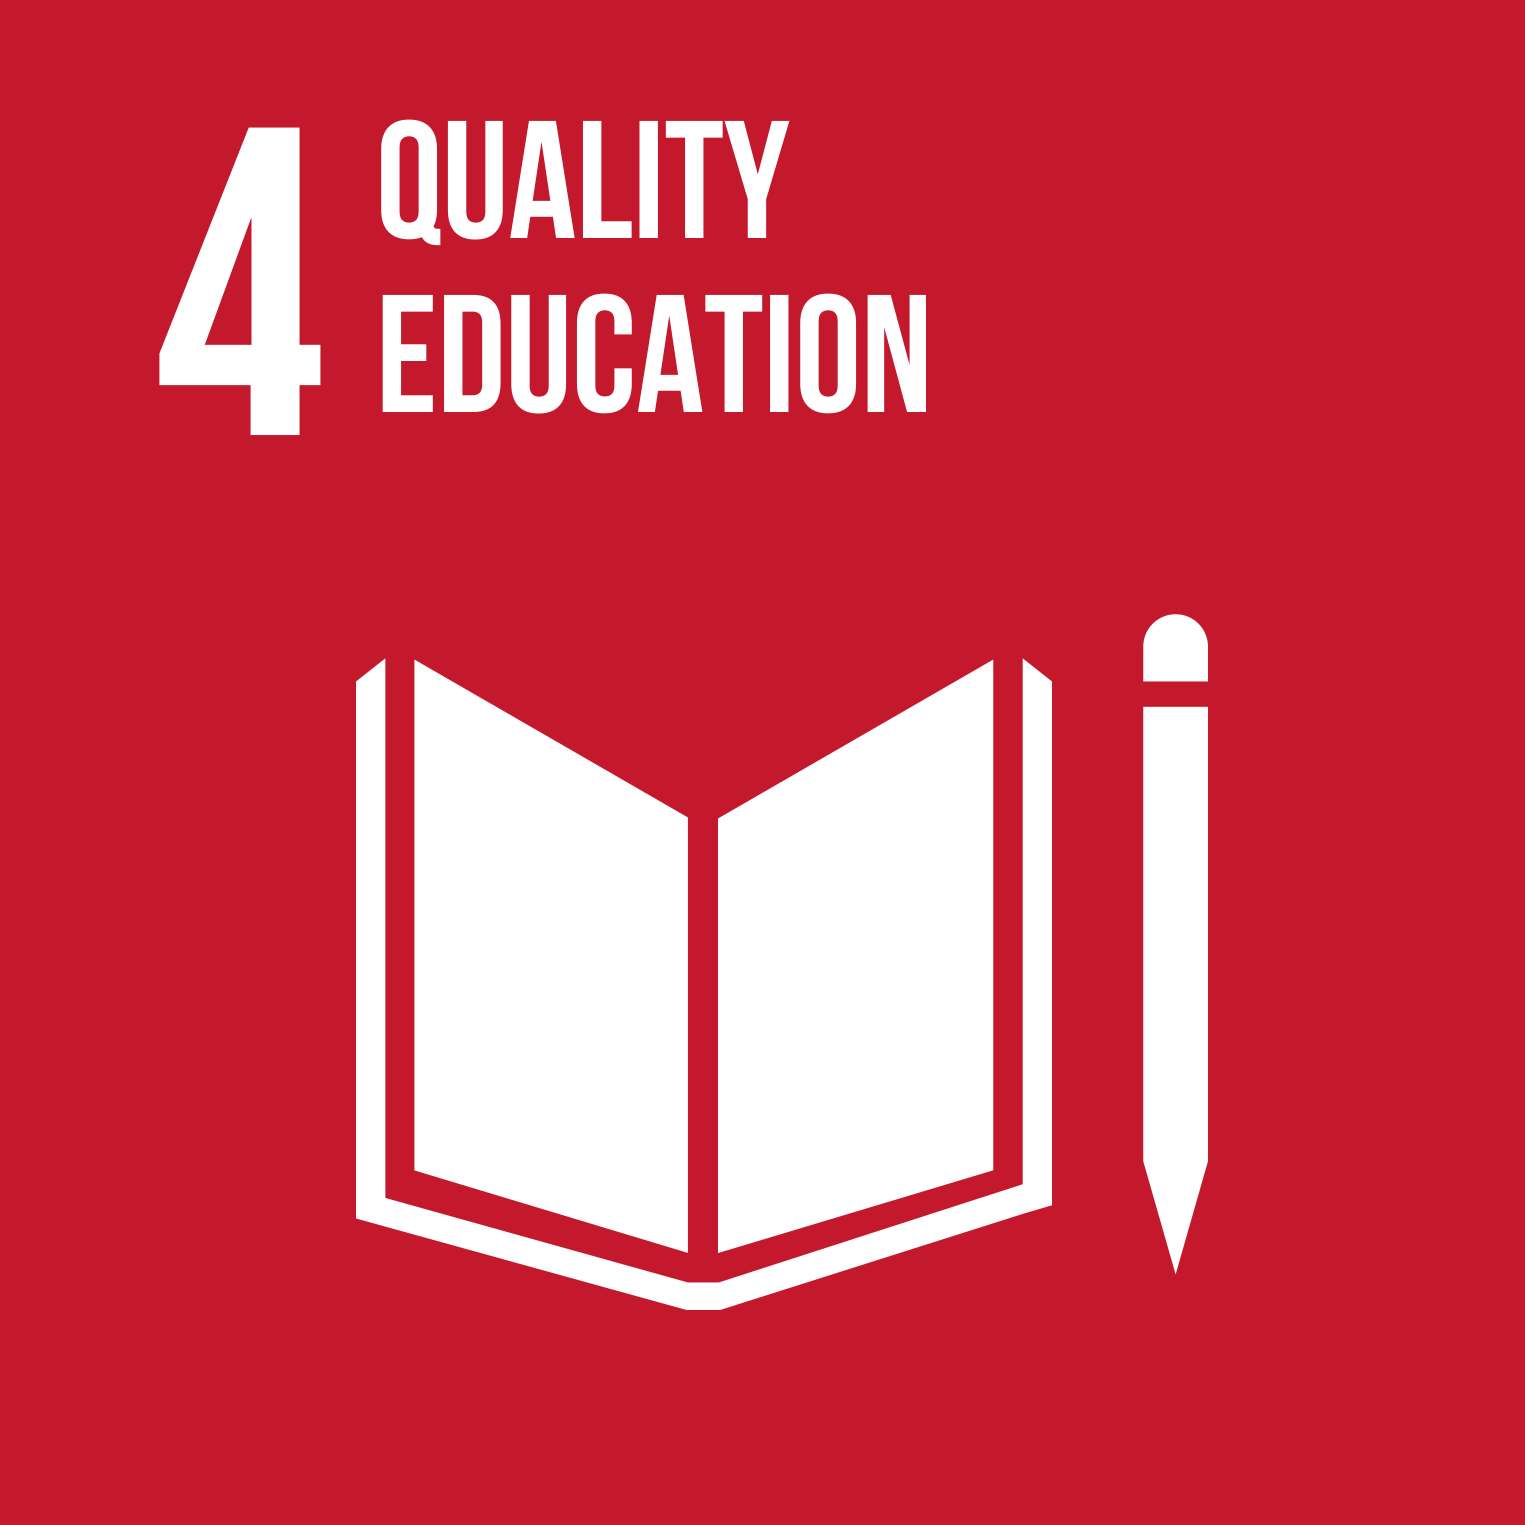 【SDG 4】Quality Education